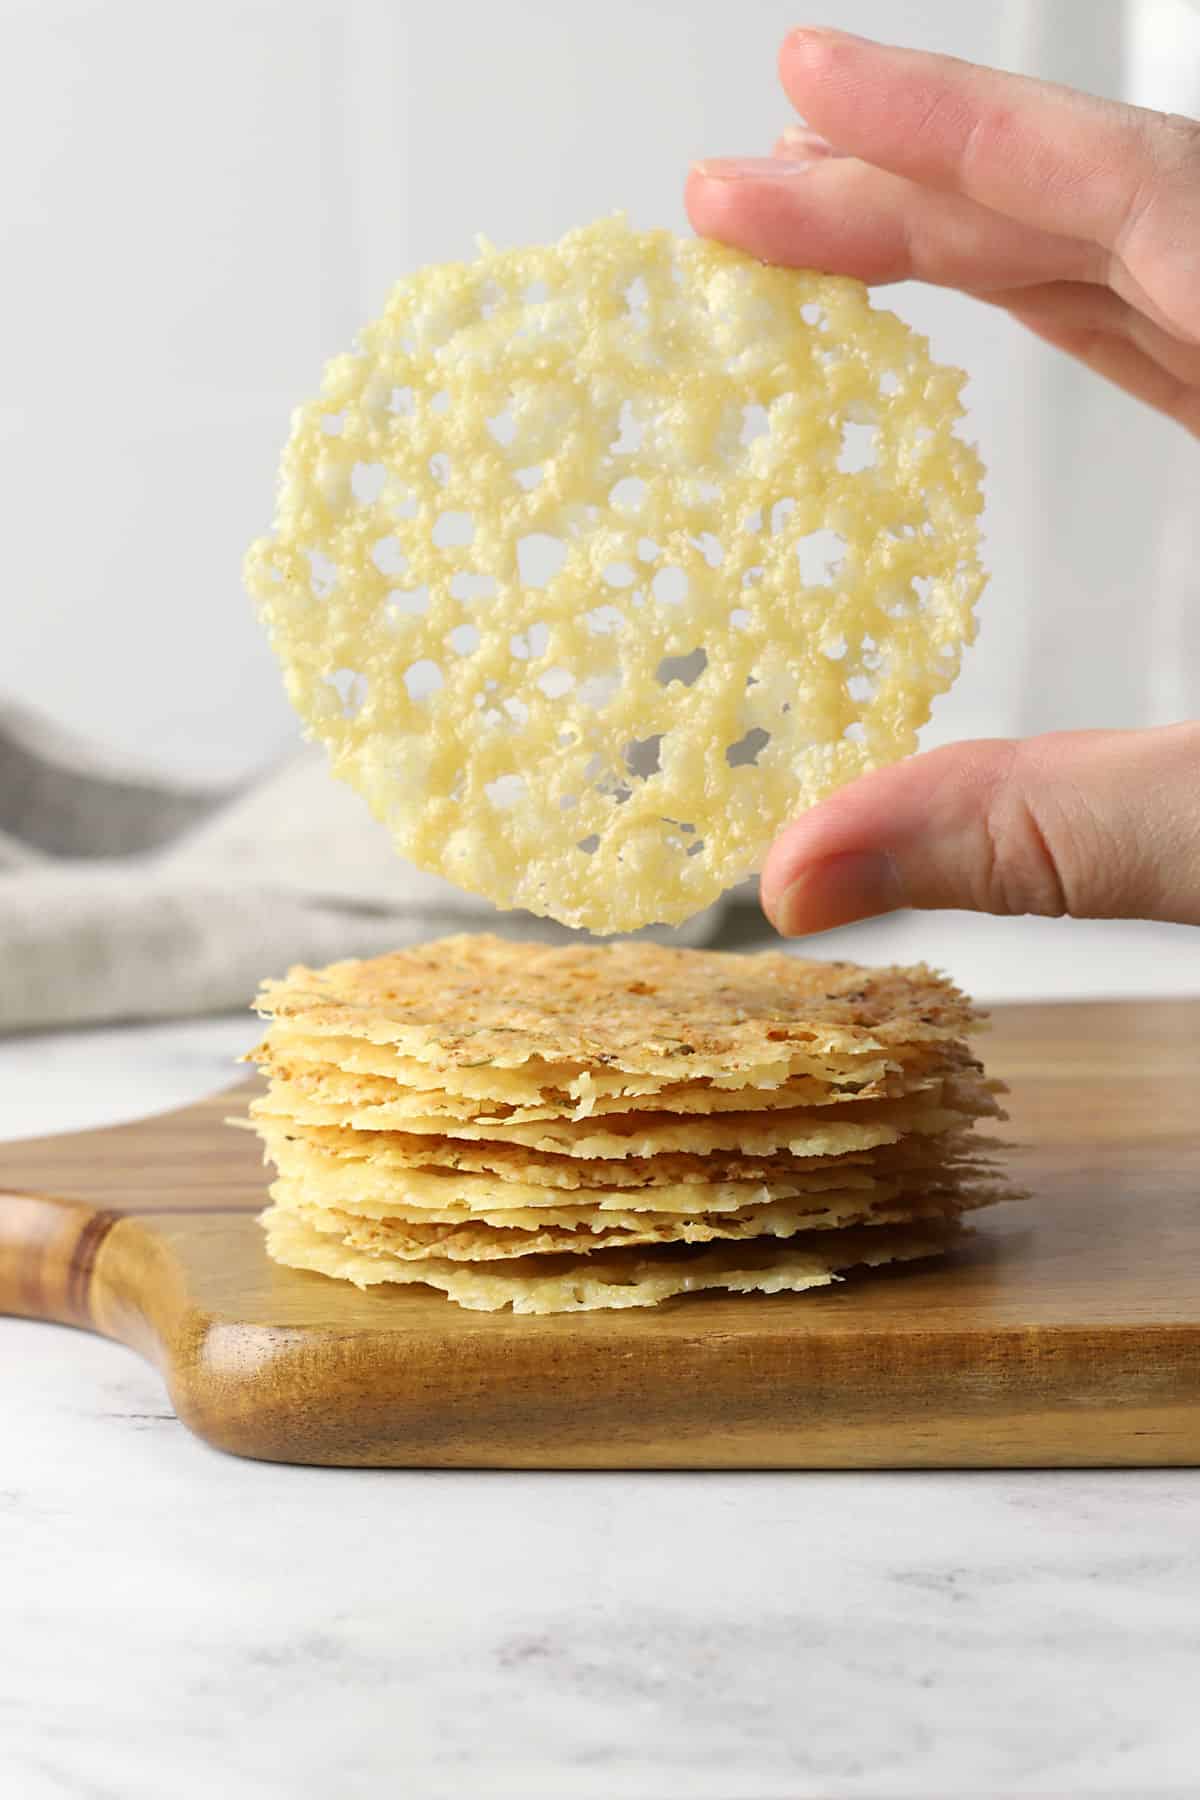 A hand holding a single parmesan crisp above a stack of more parmesan crisps.